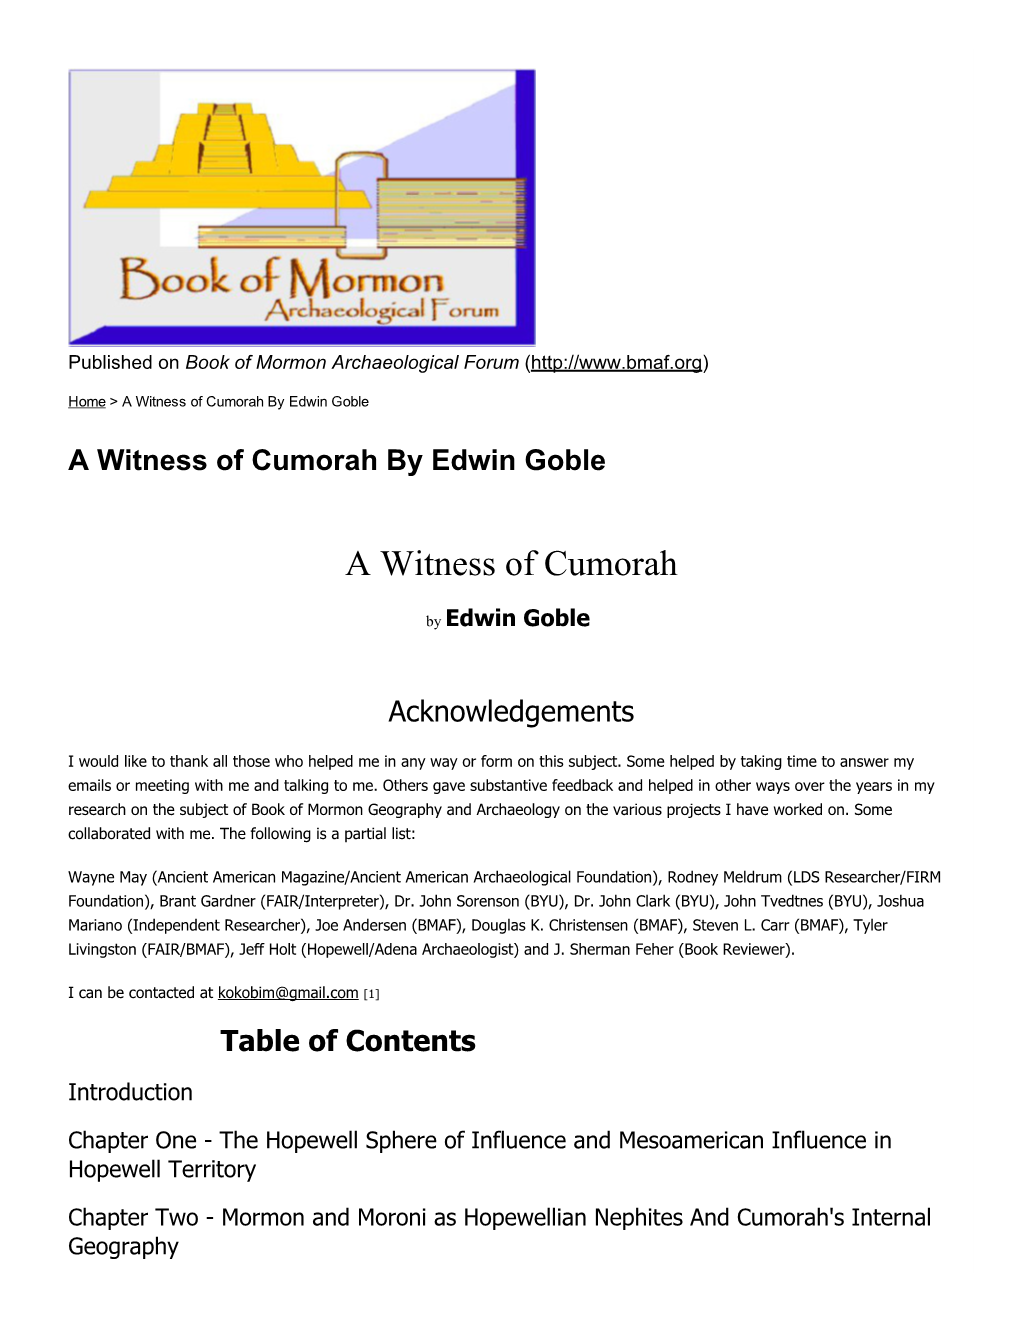 A Witness of Cumorah by Edwin Goble